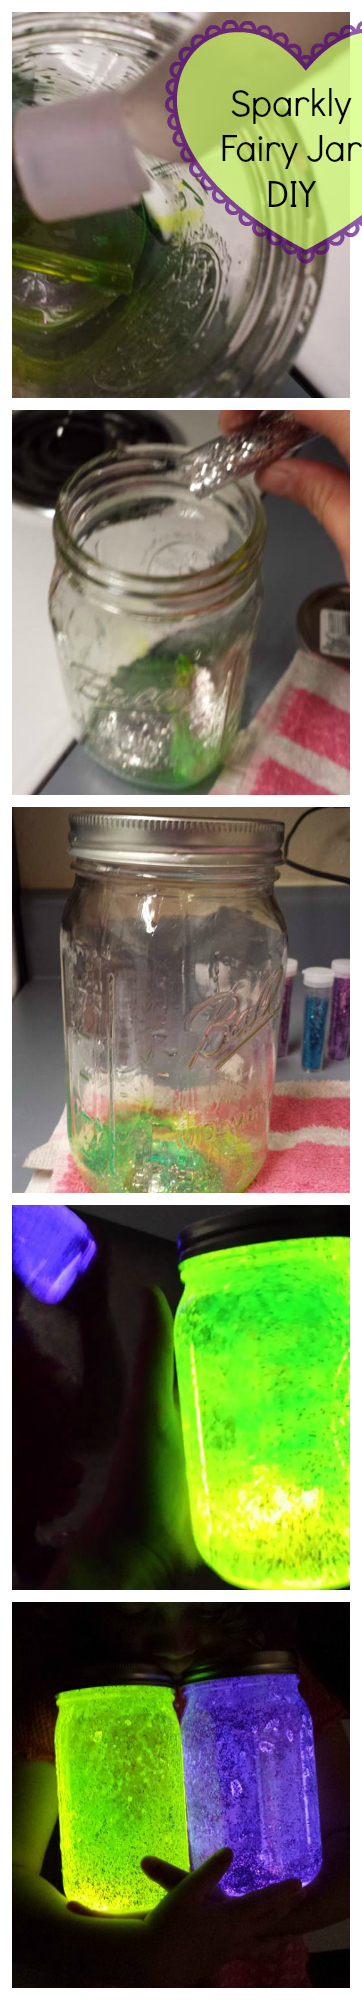 DIY Tutorial for Creating your own Fairy Jar